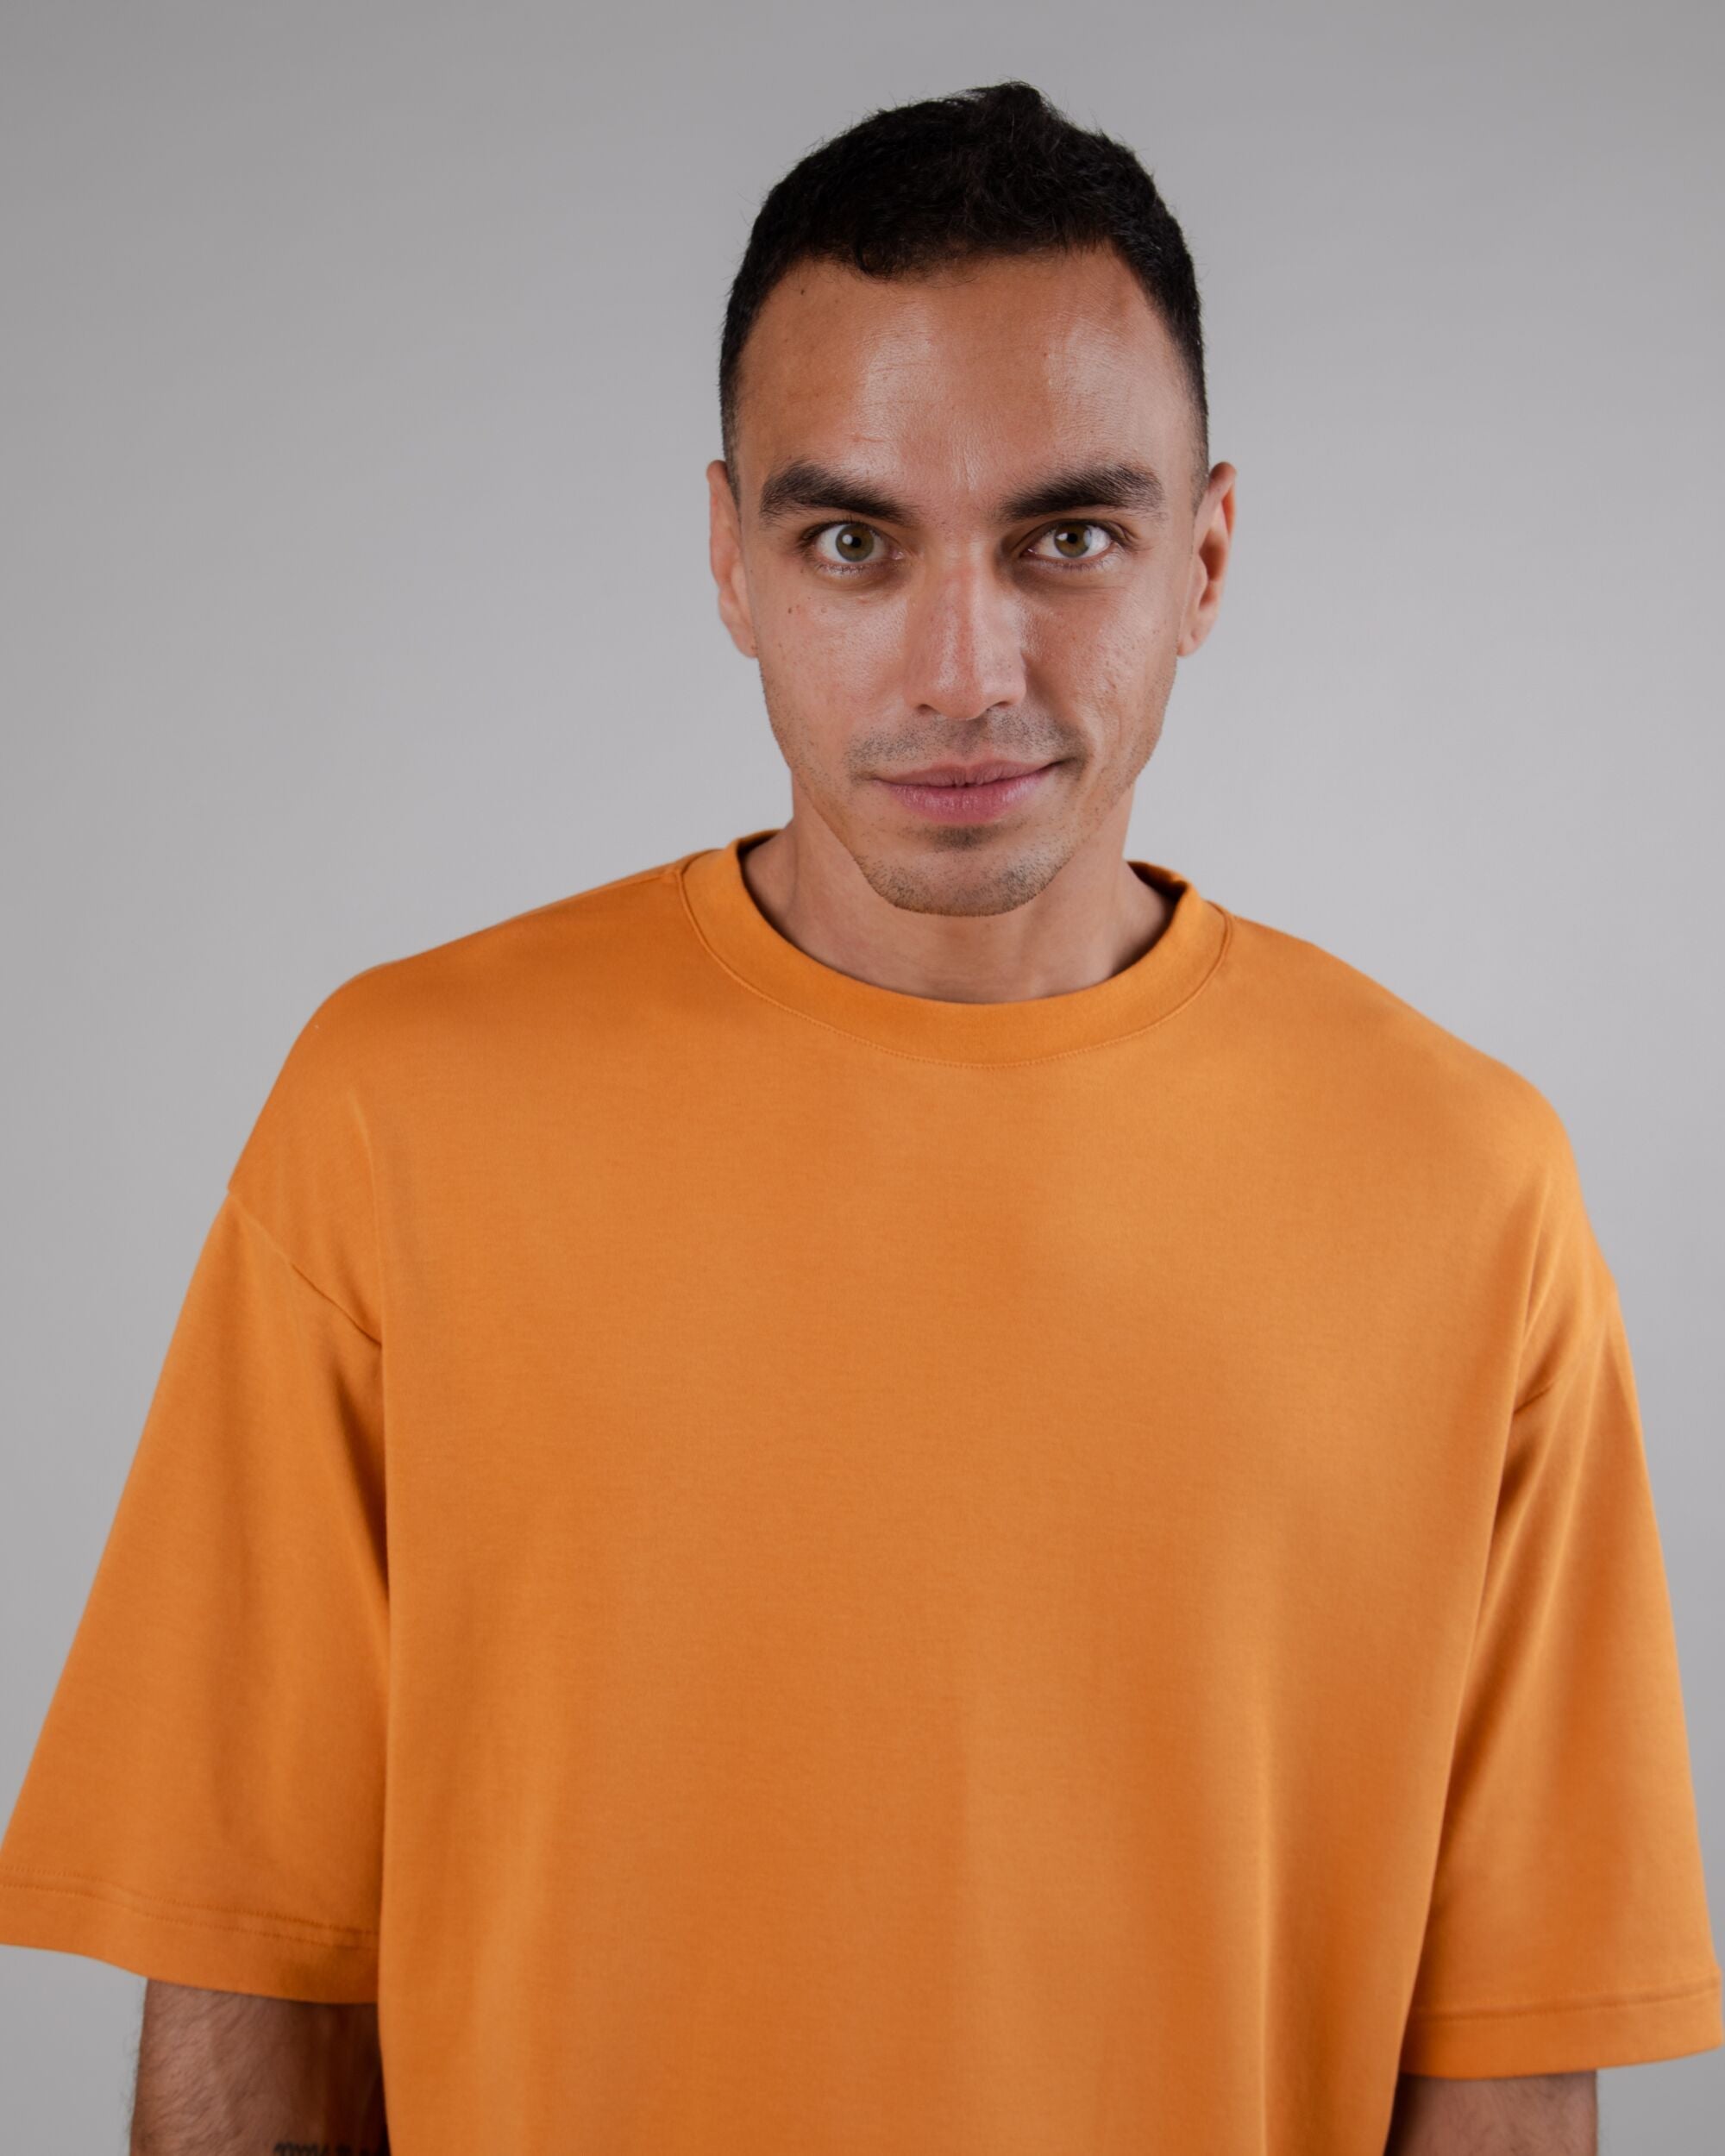 Orange shirt oversize interlock made of cotton from Brava Fabrics